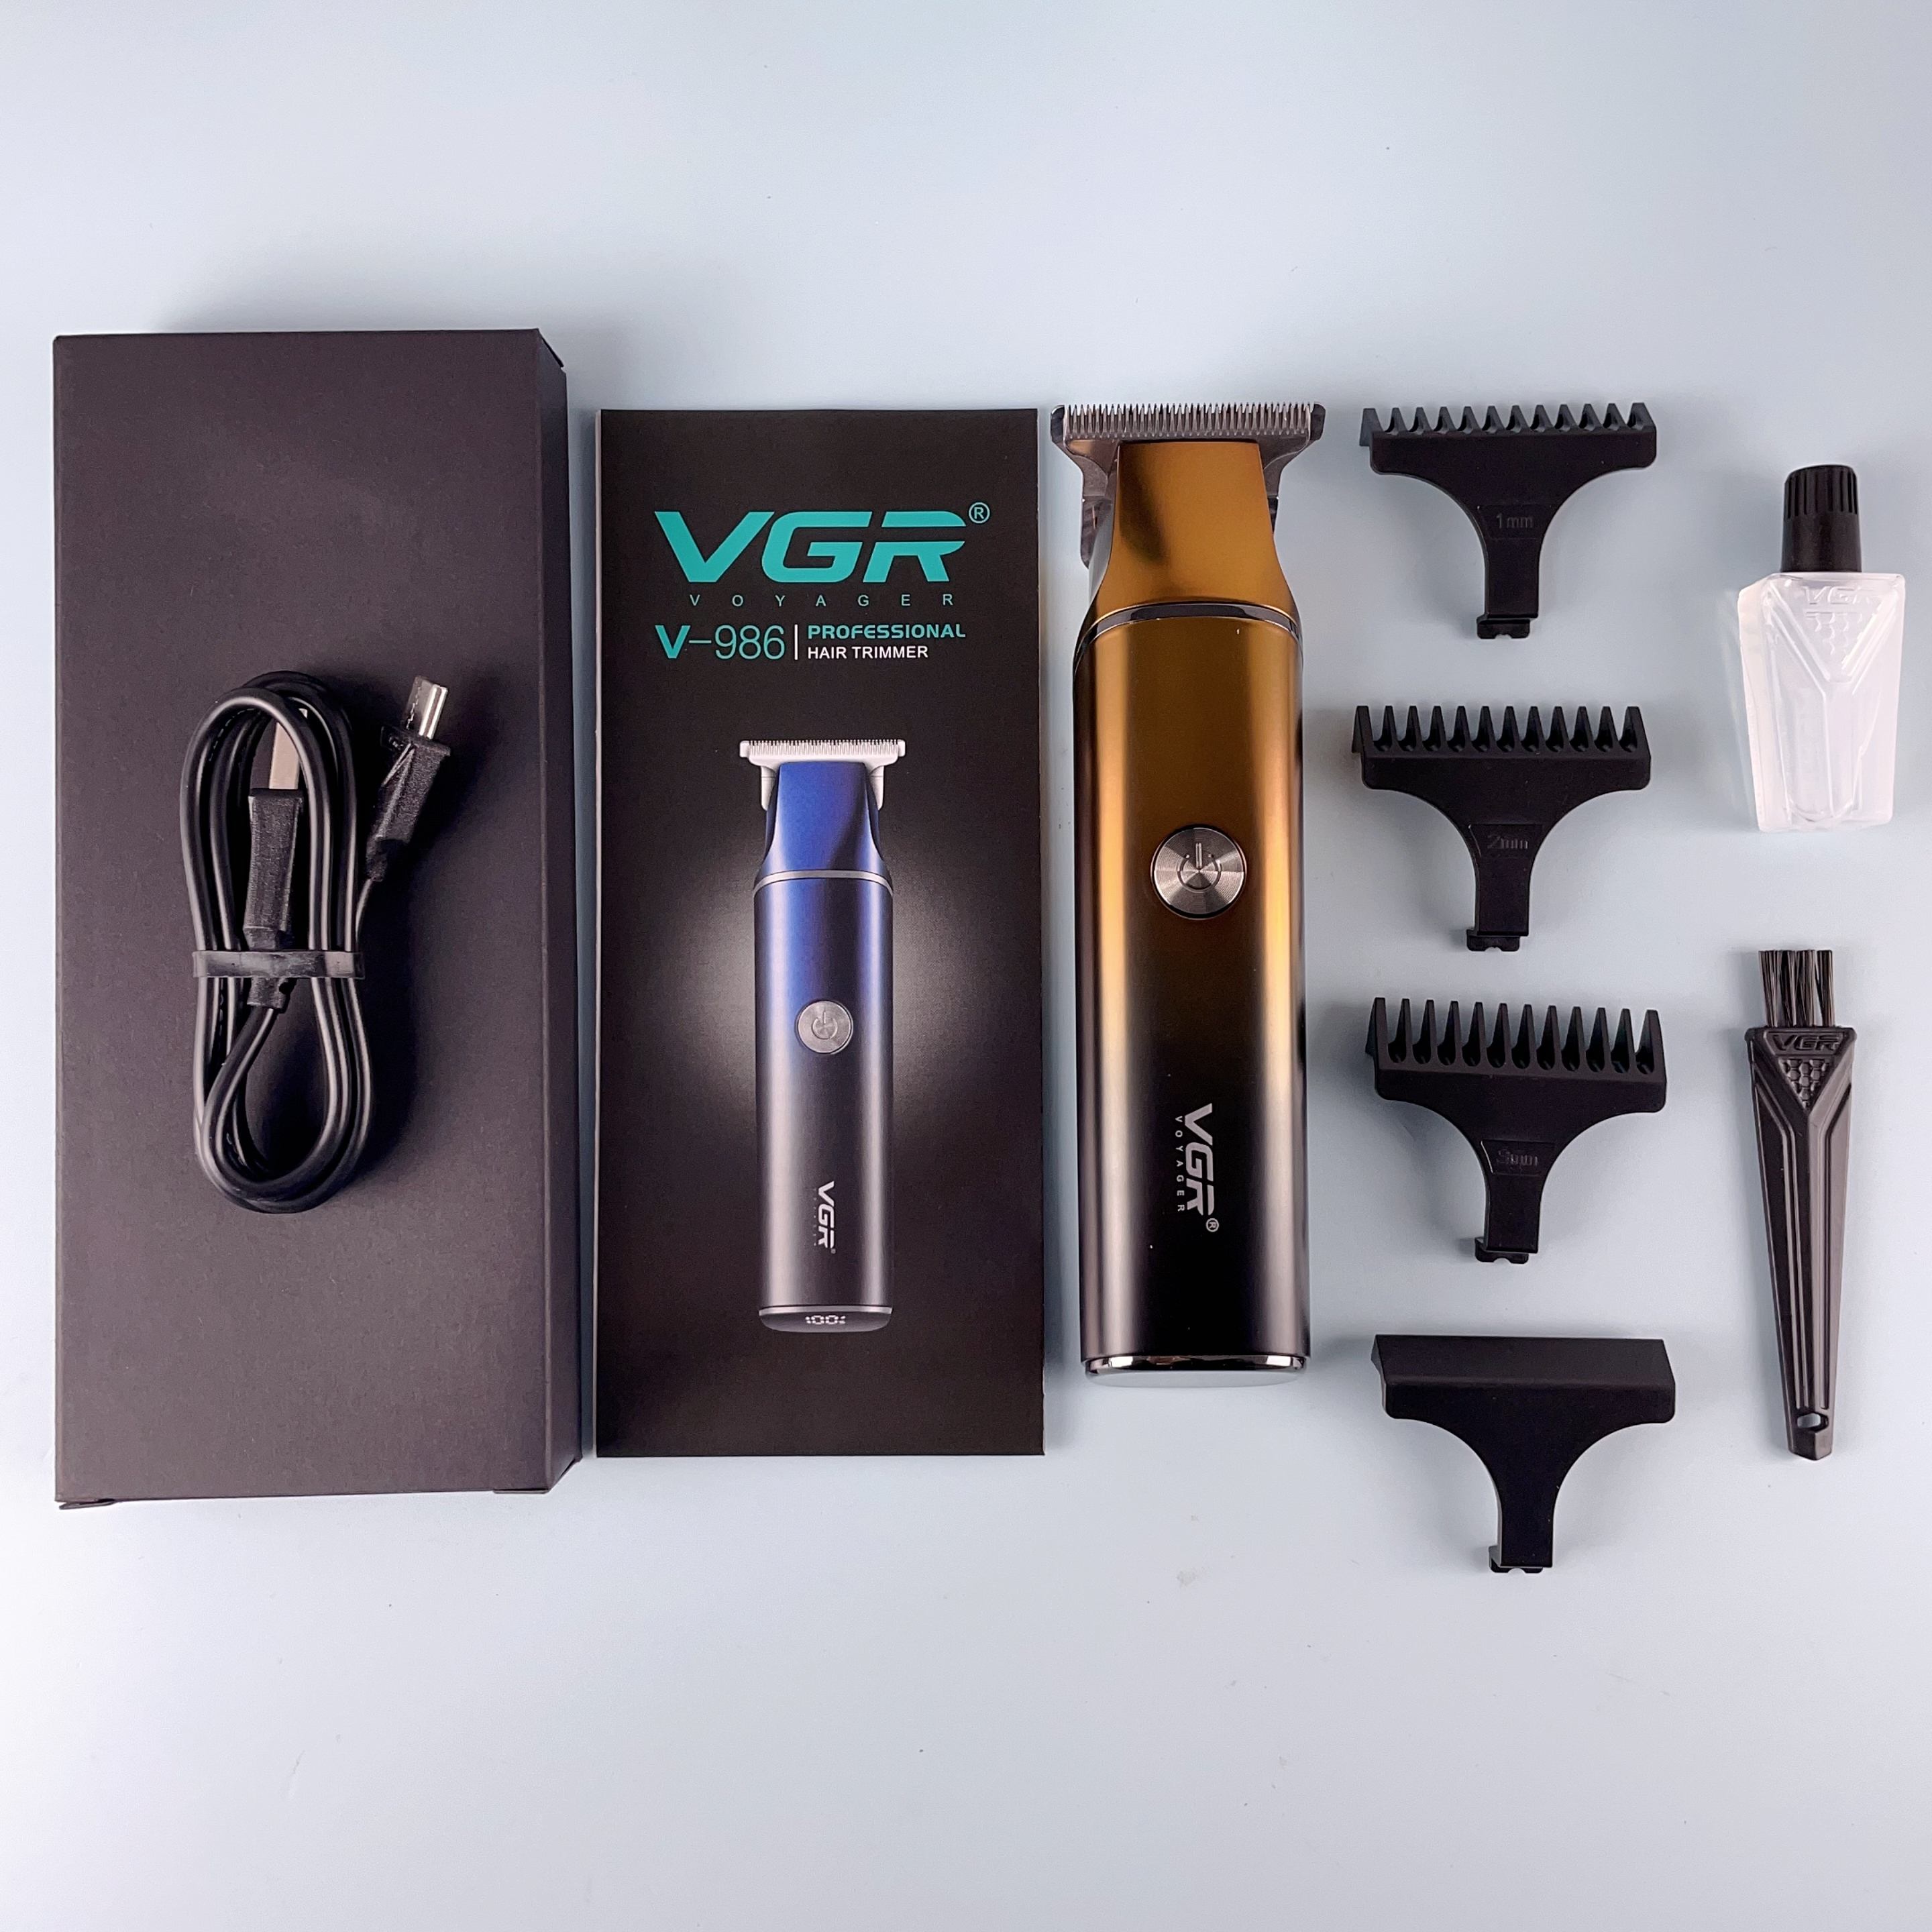 VGR V-986 Professional T-blade Precision Hair Trimmer for Men